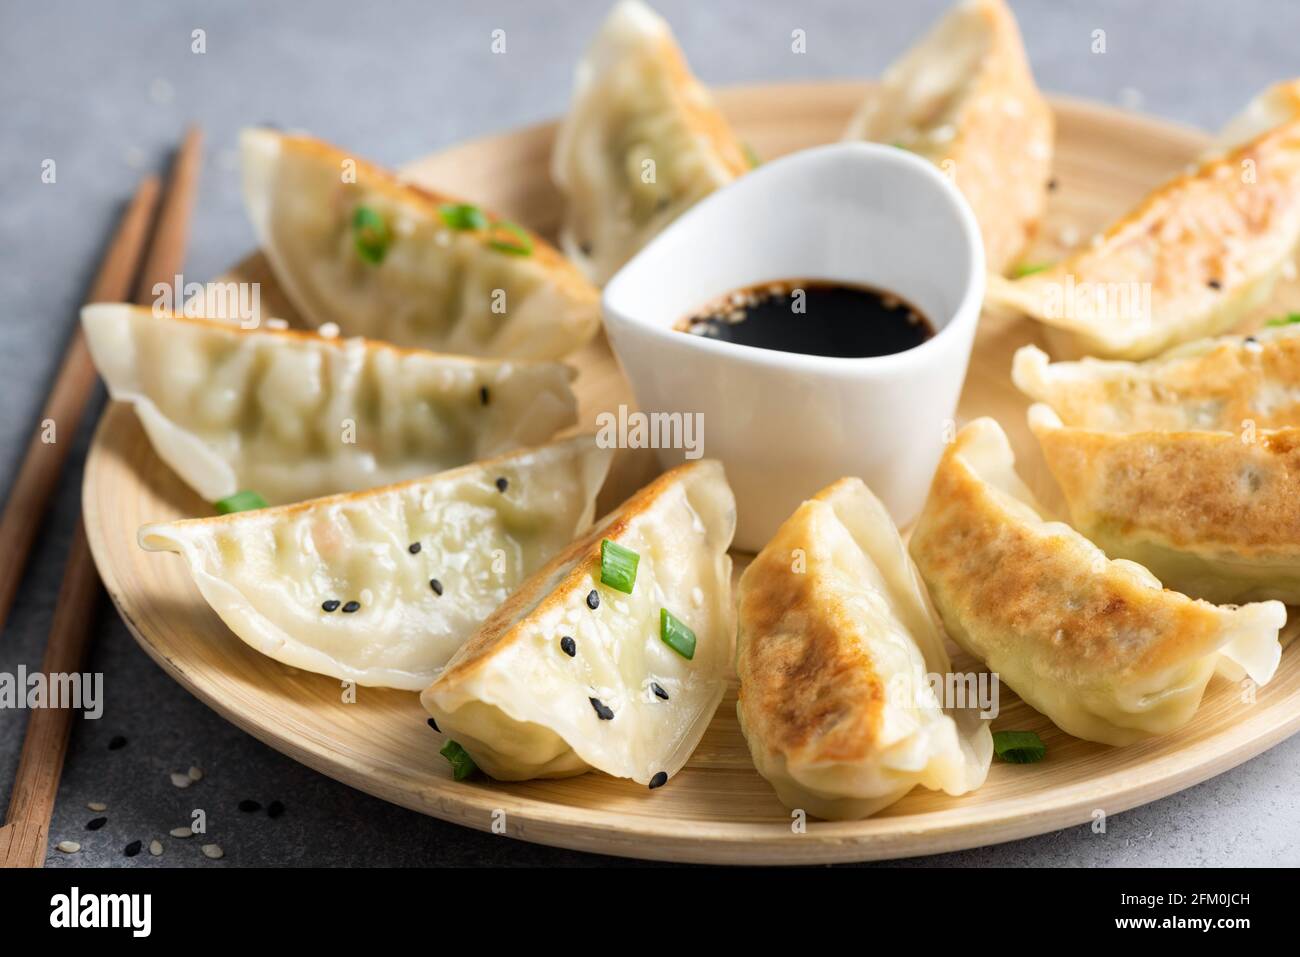 Gyoza or jiaozi fried stuffed dumplings on a bamboo plate, closeup view Stock Photo